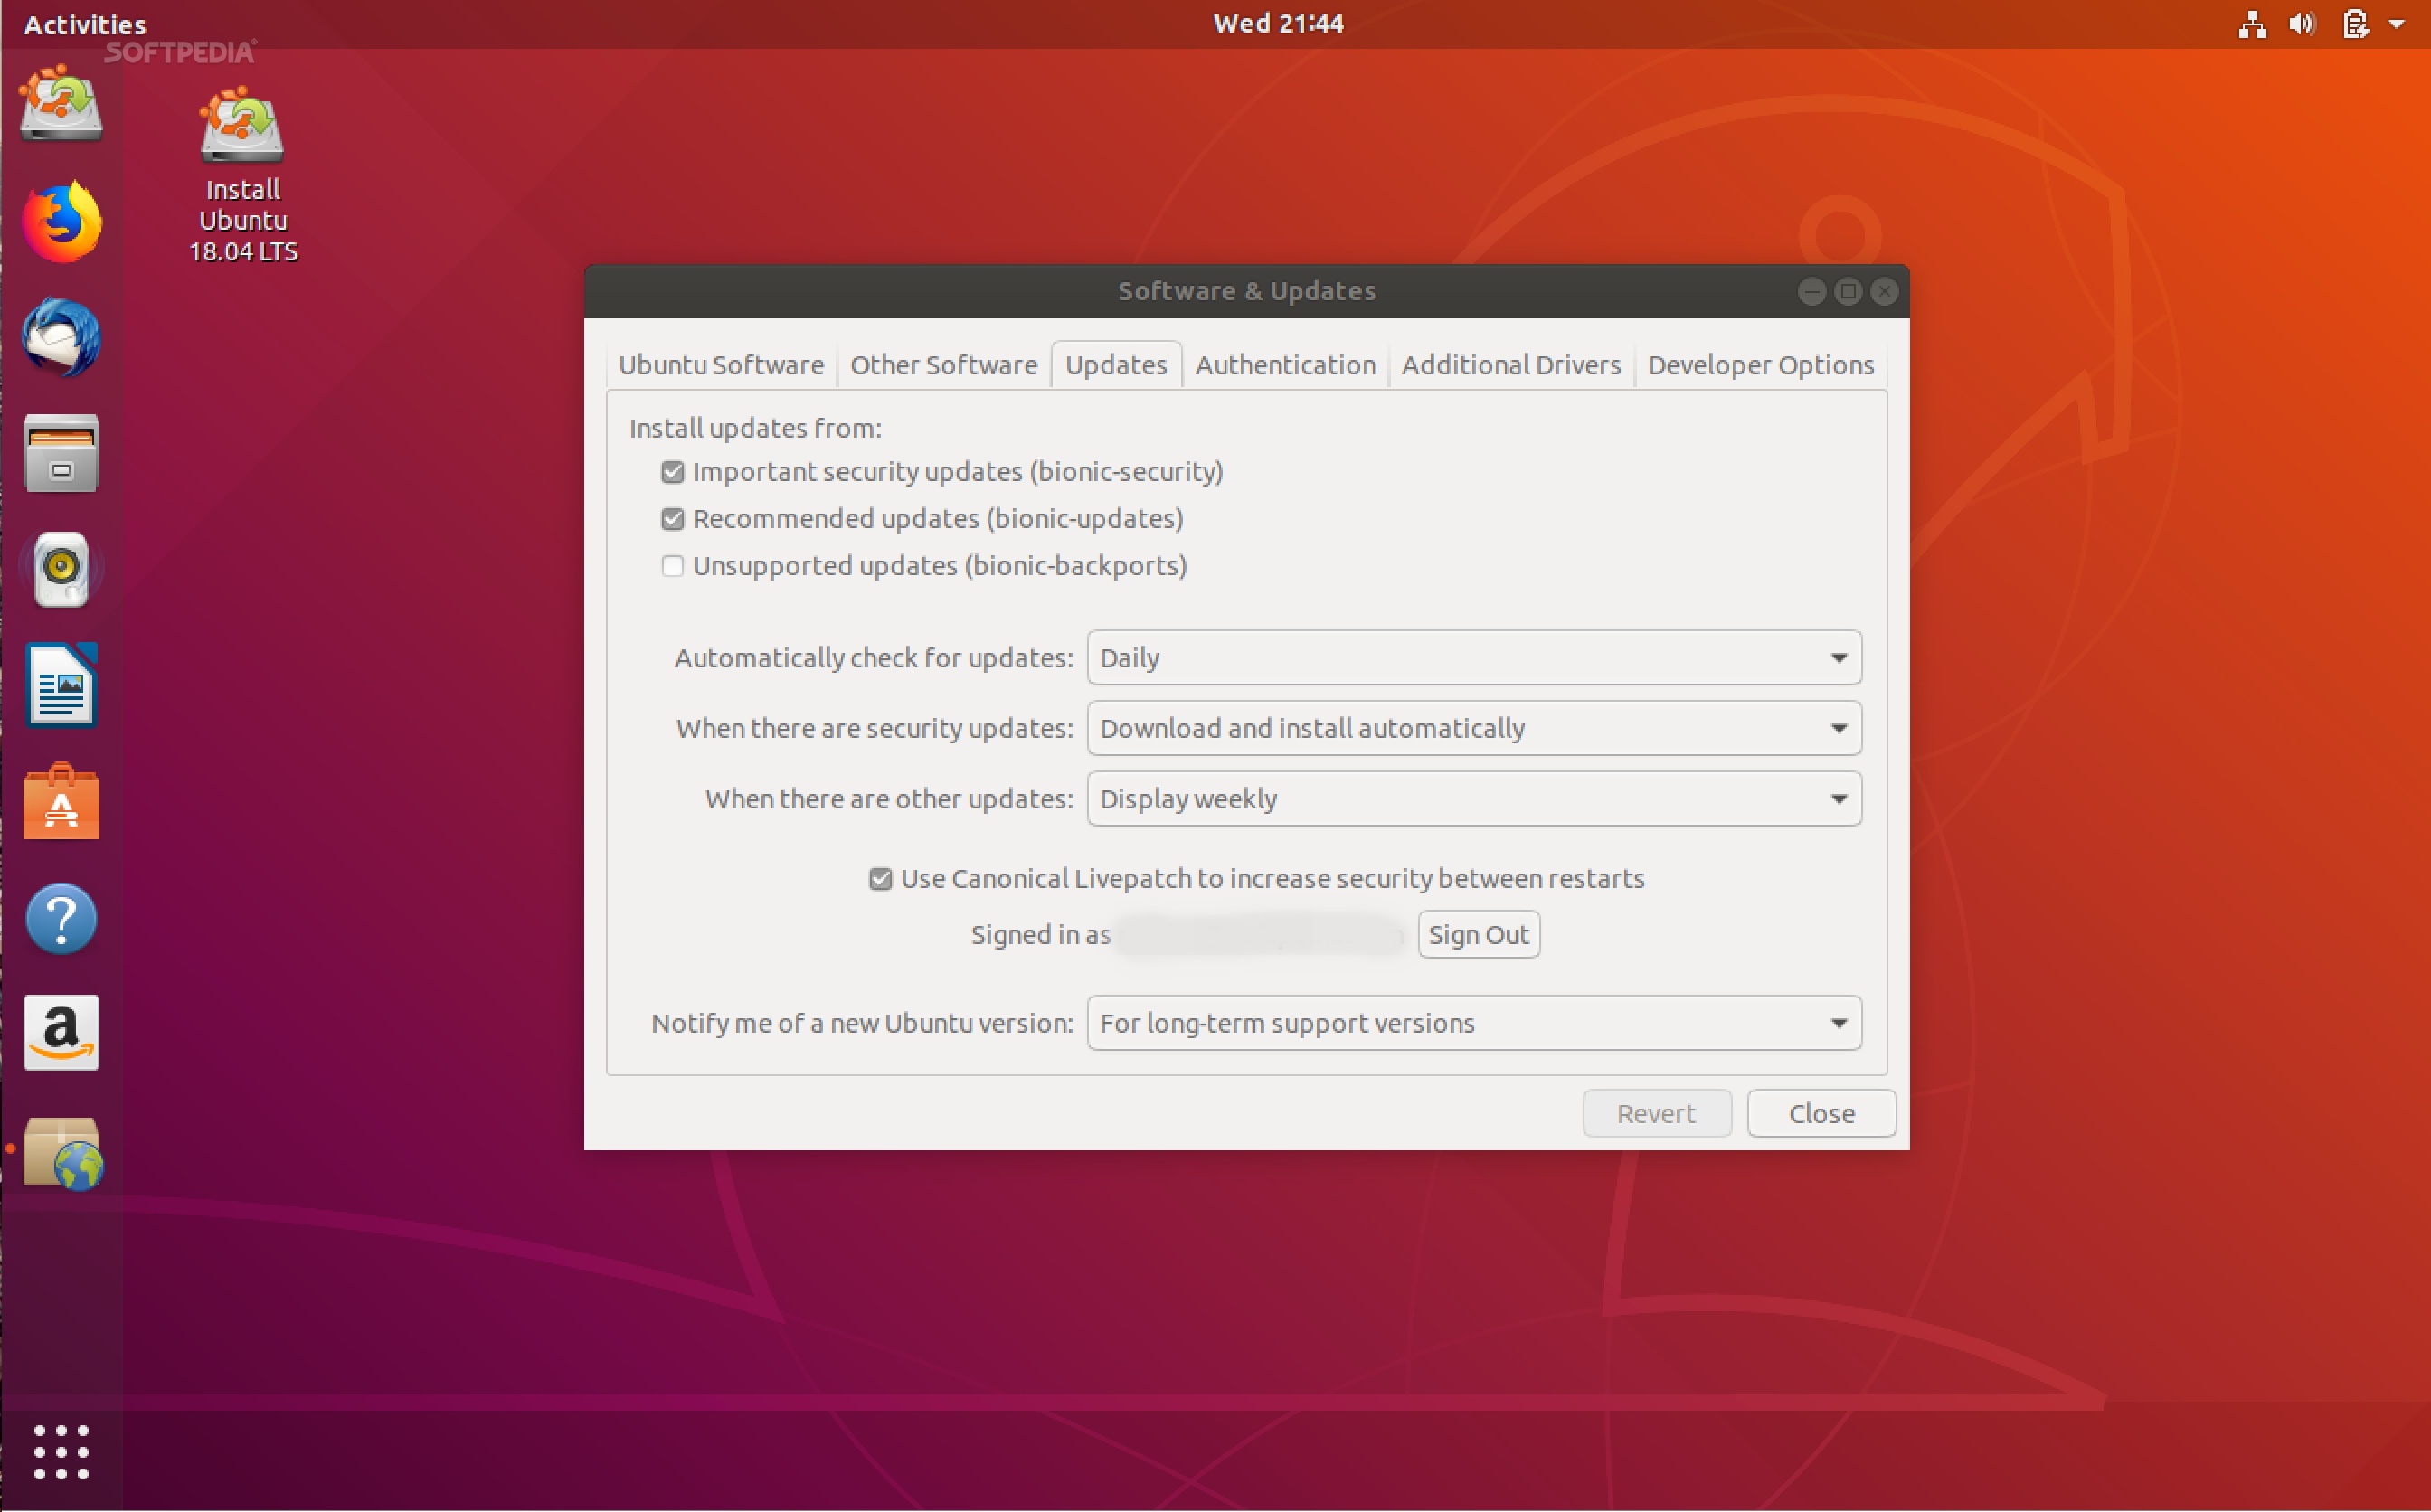 ubuntu-18-04-lts-integrates-canonical-livepatch-for-rebootless-kernel-updates-520680-3.jpg